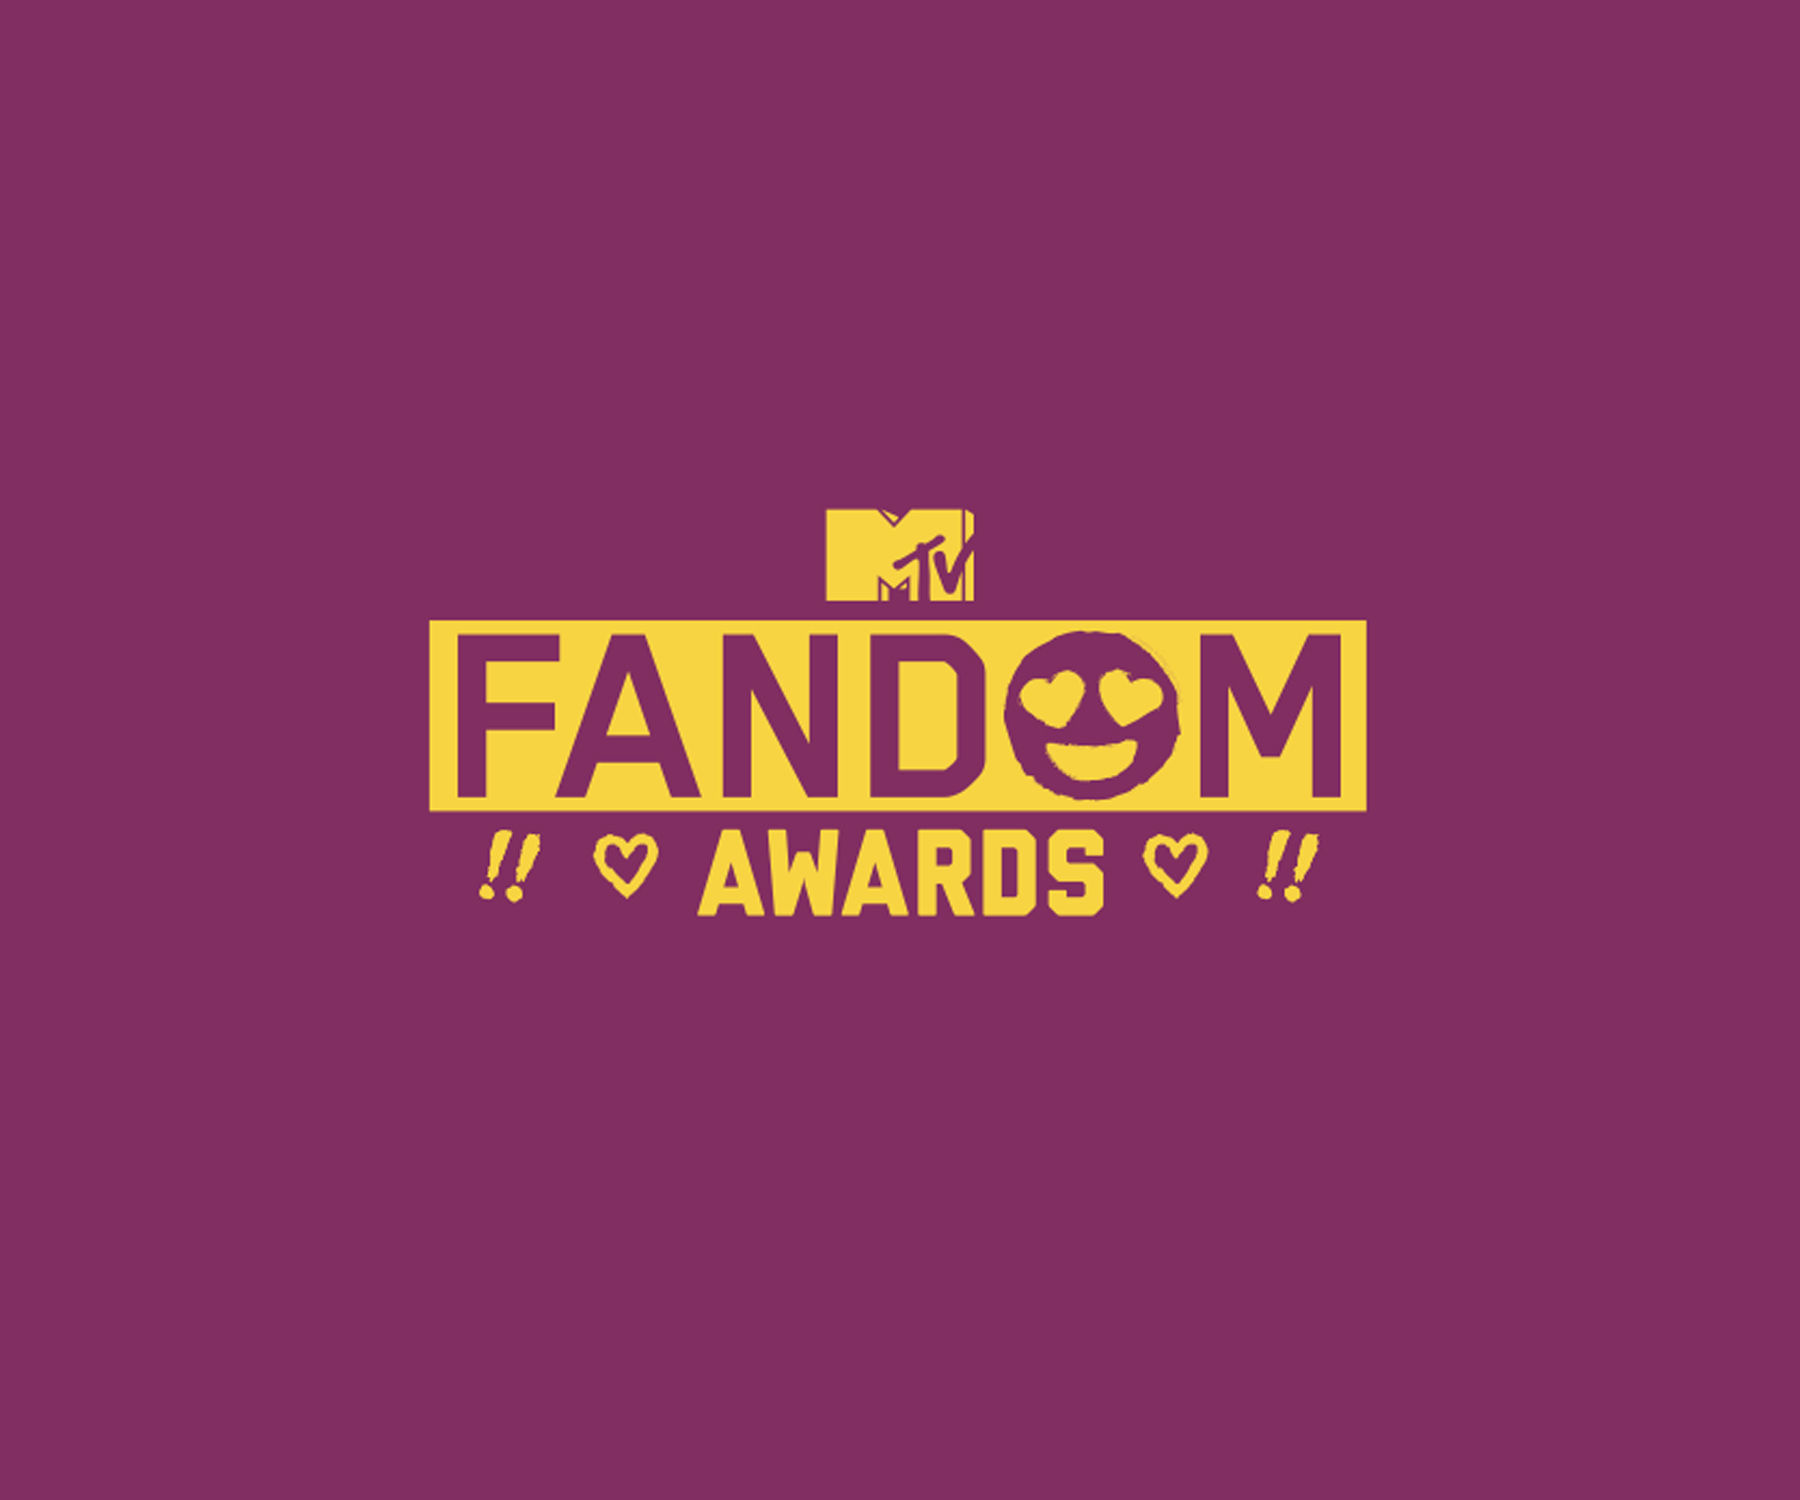 MTV Fandom Awards ne zaman